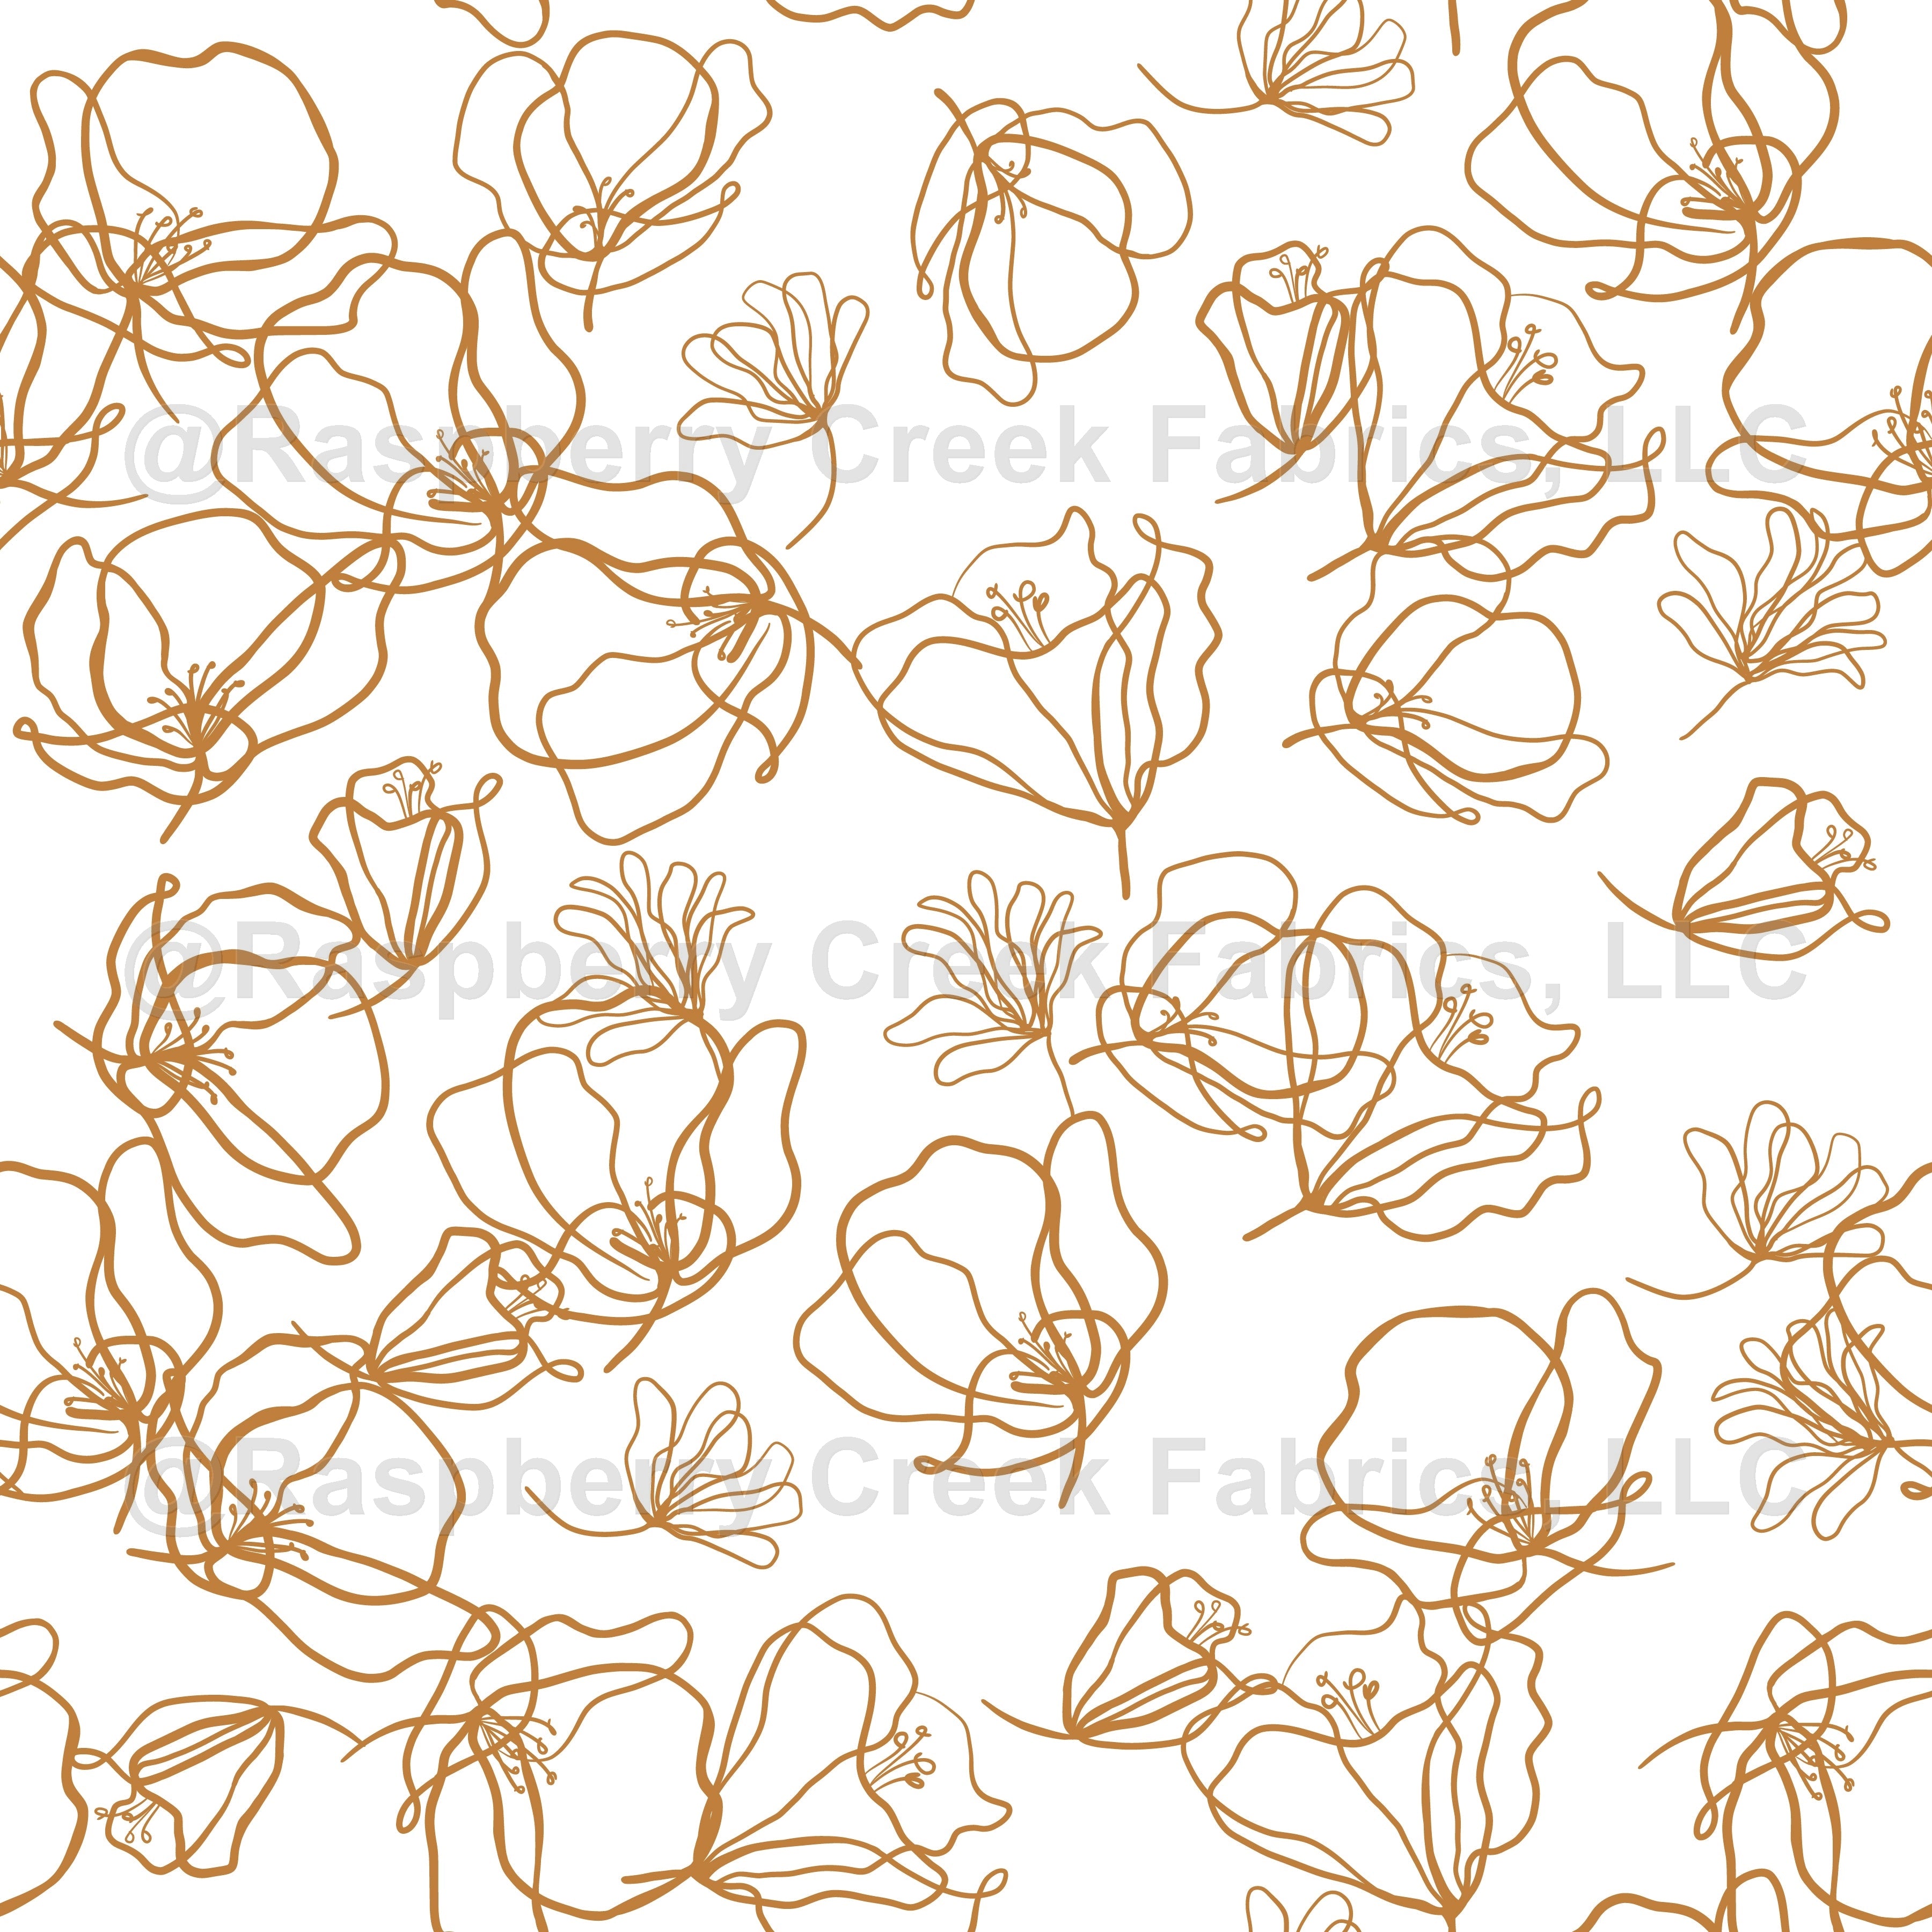 Crowded Floral - white | Hidden Treasures Wallpaper, Raspberry Creek Fabrics, watermarked